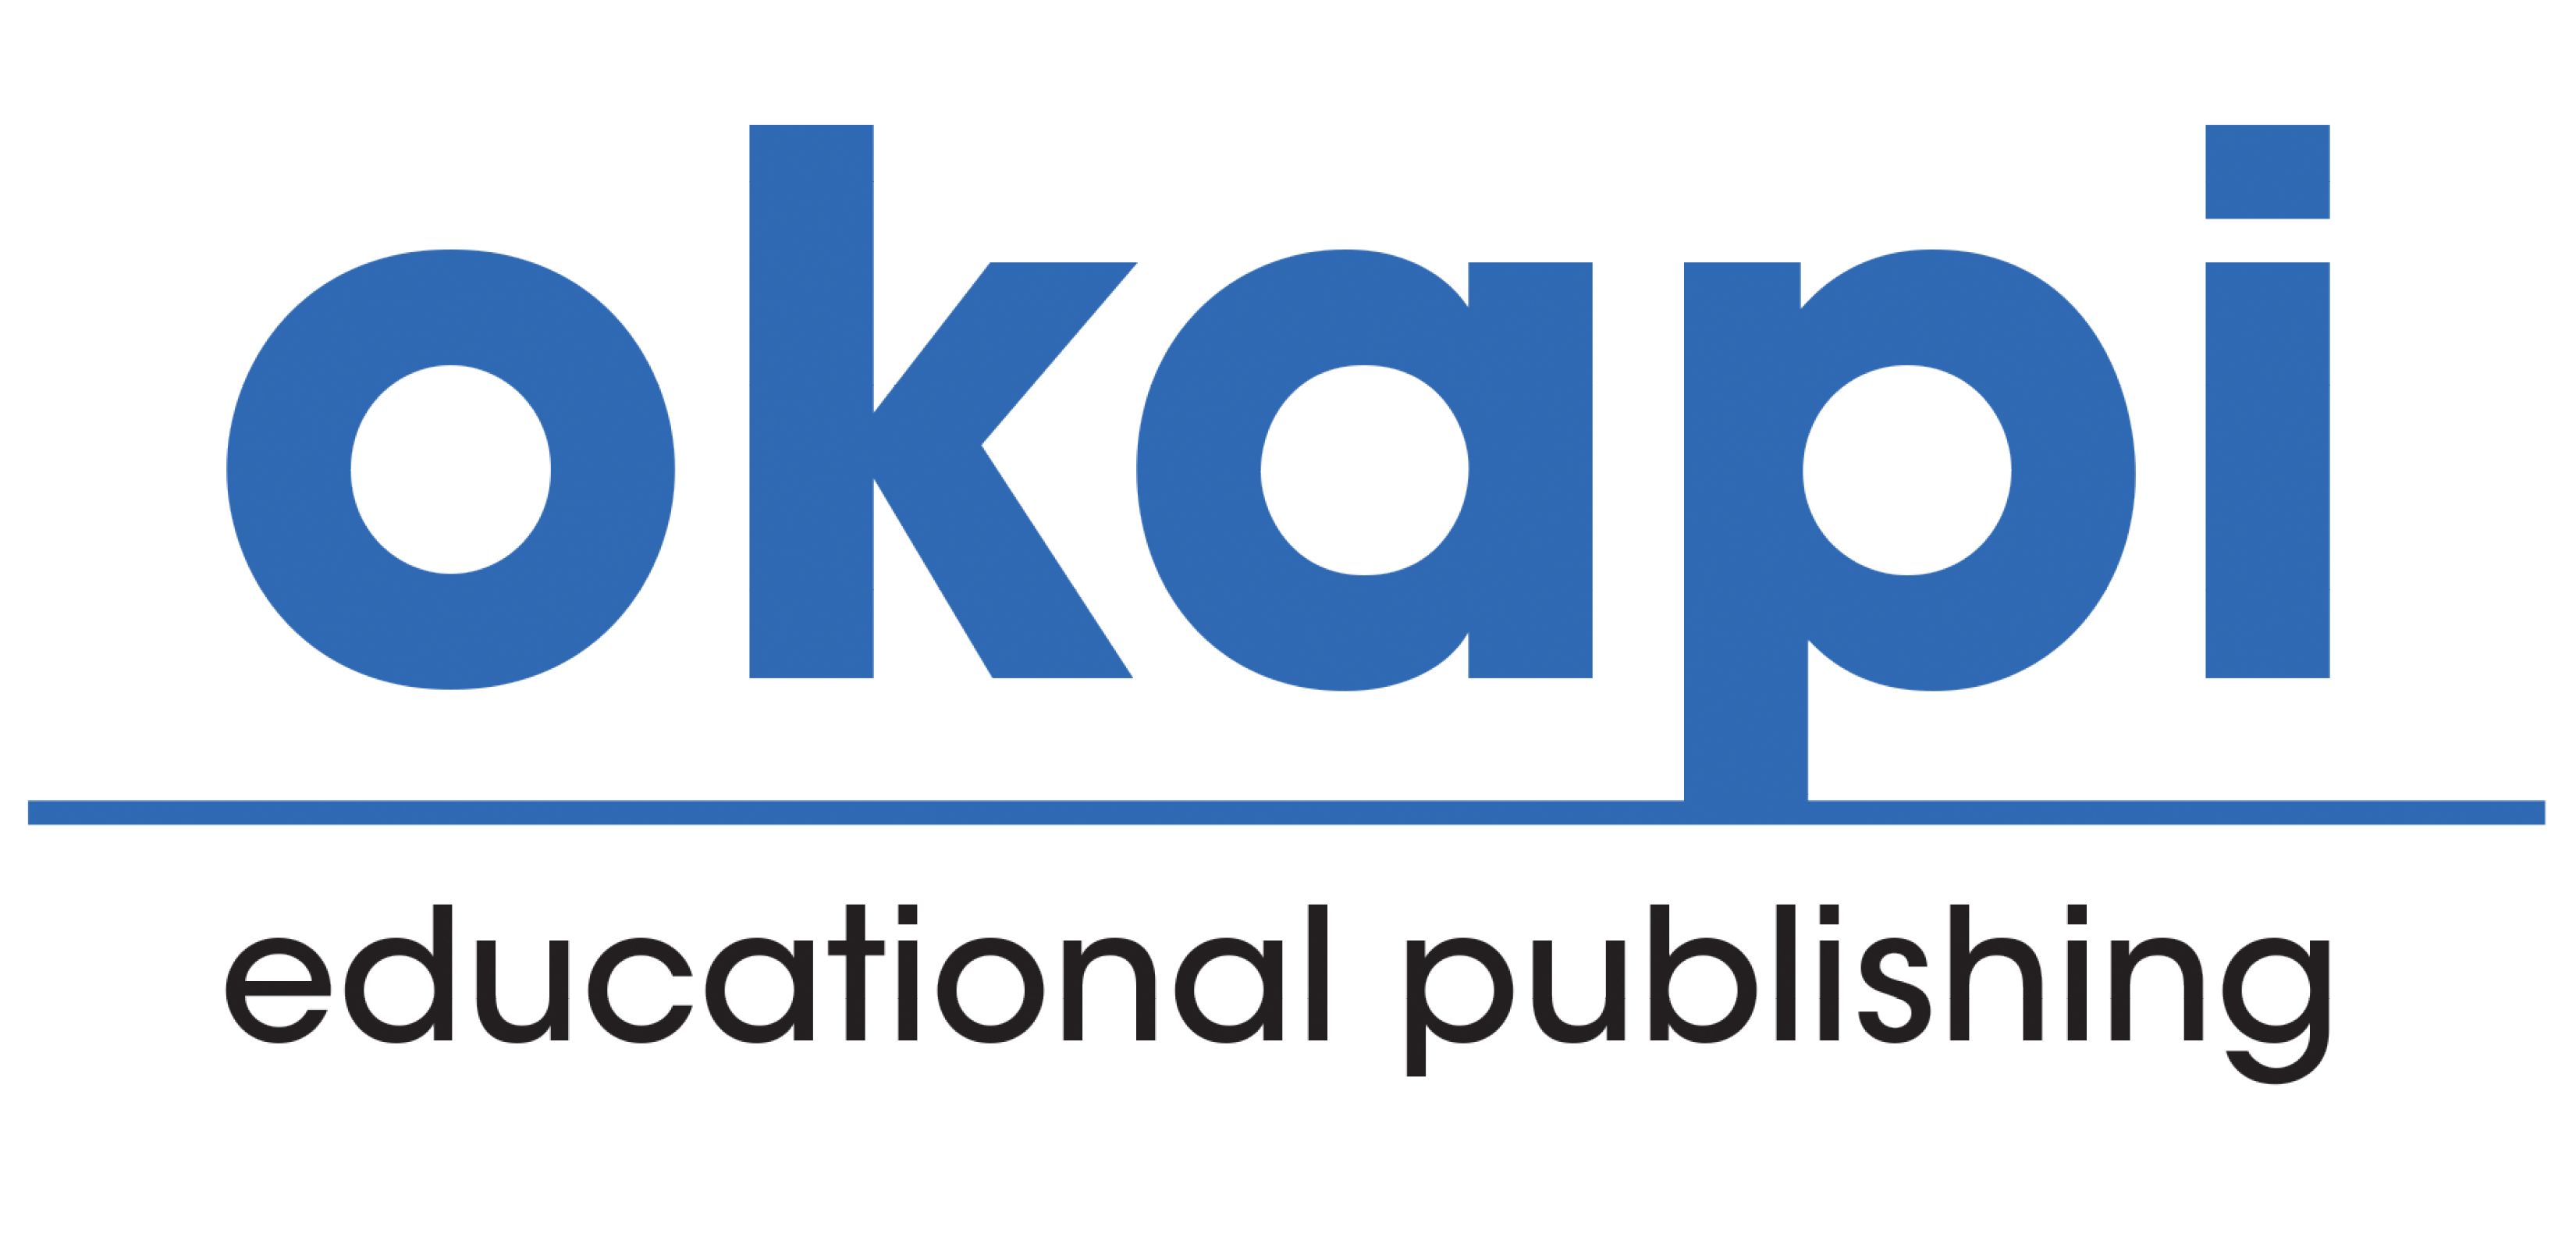 Okapi logo